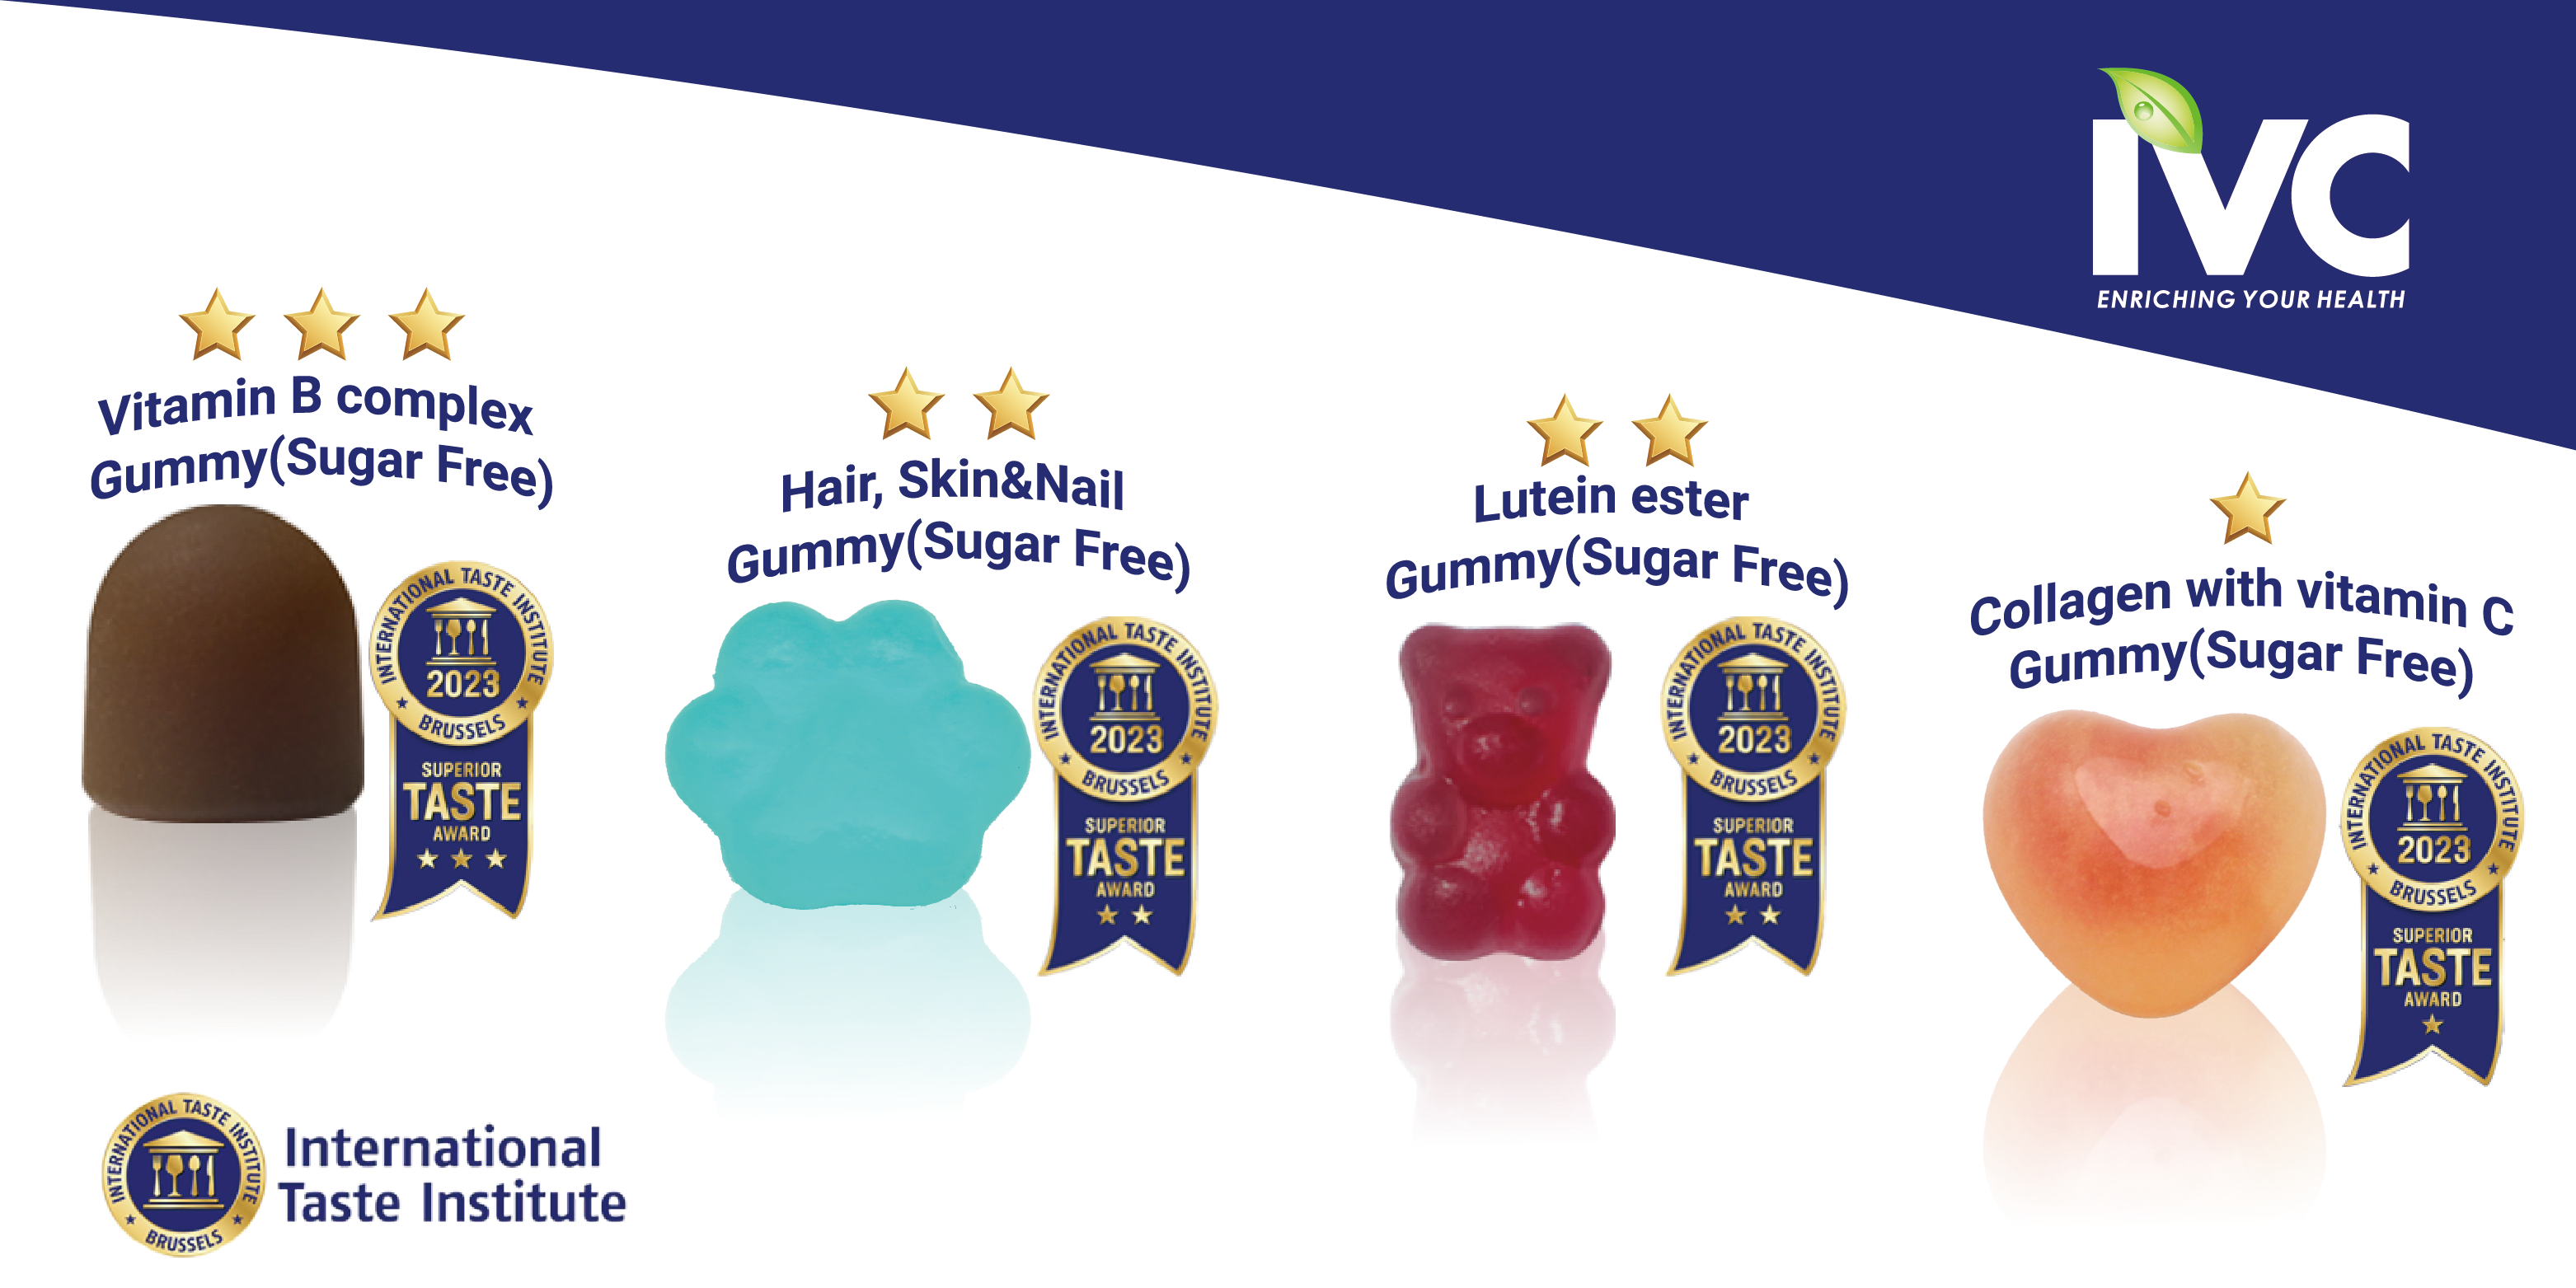 IVC’s Gummies Win 2023 Superior Taste Award From International Taste Institute